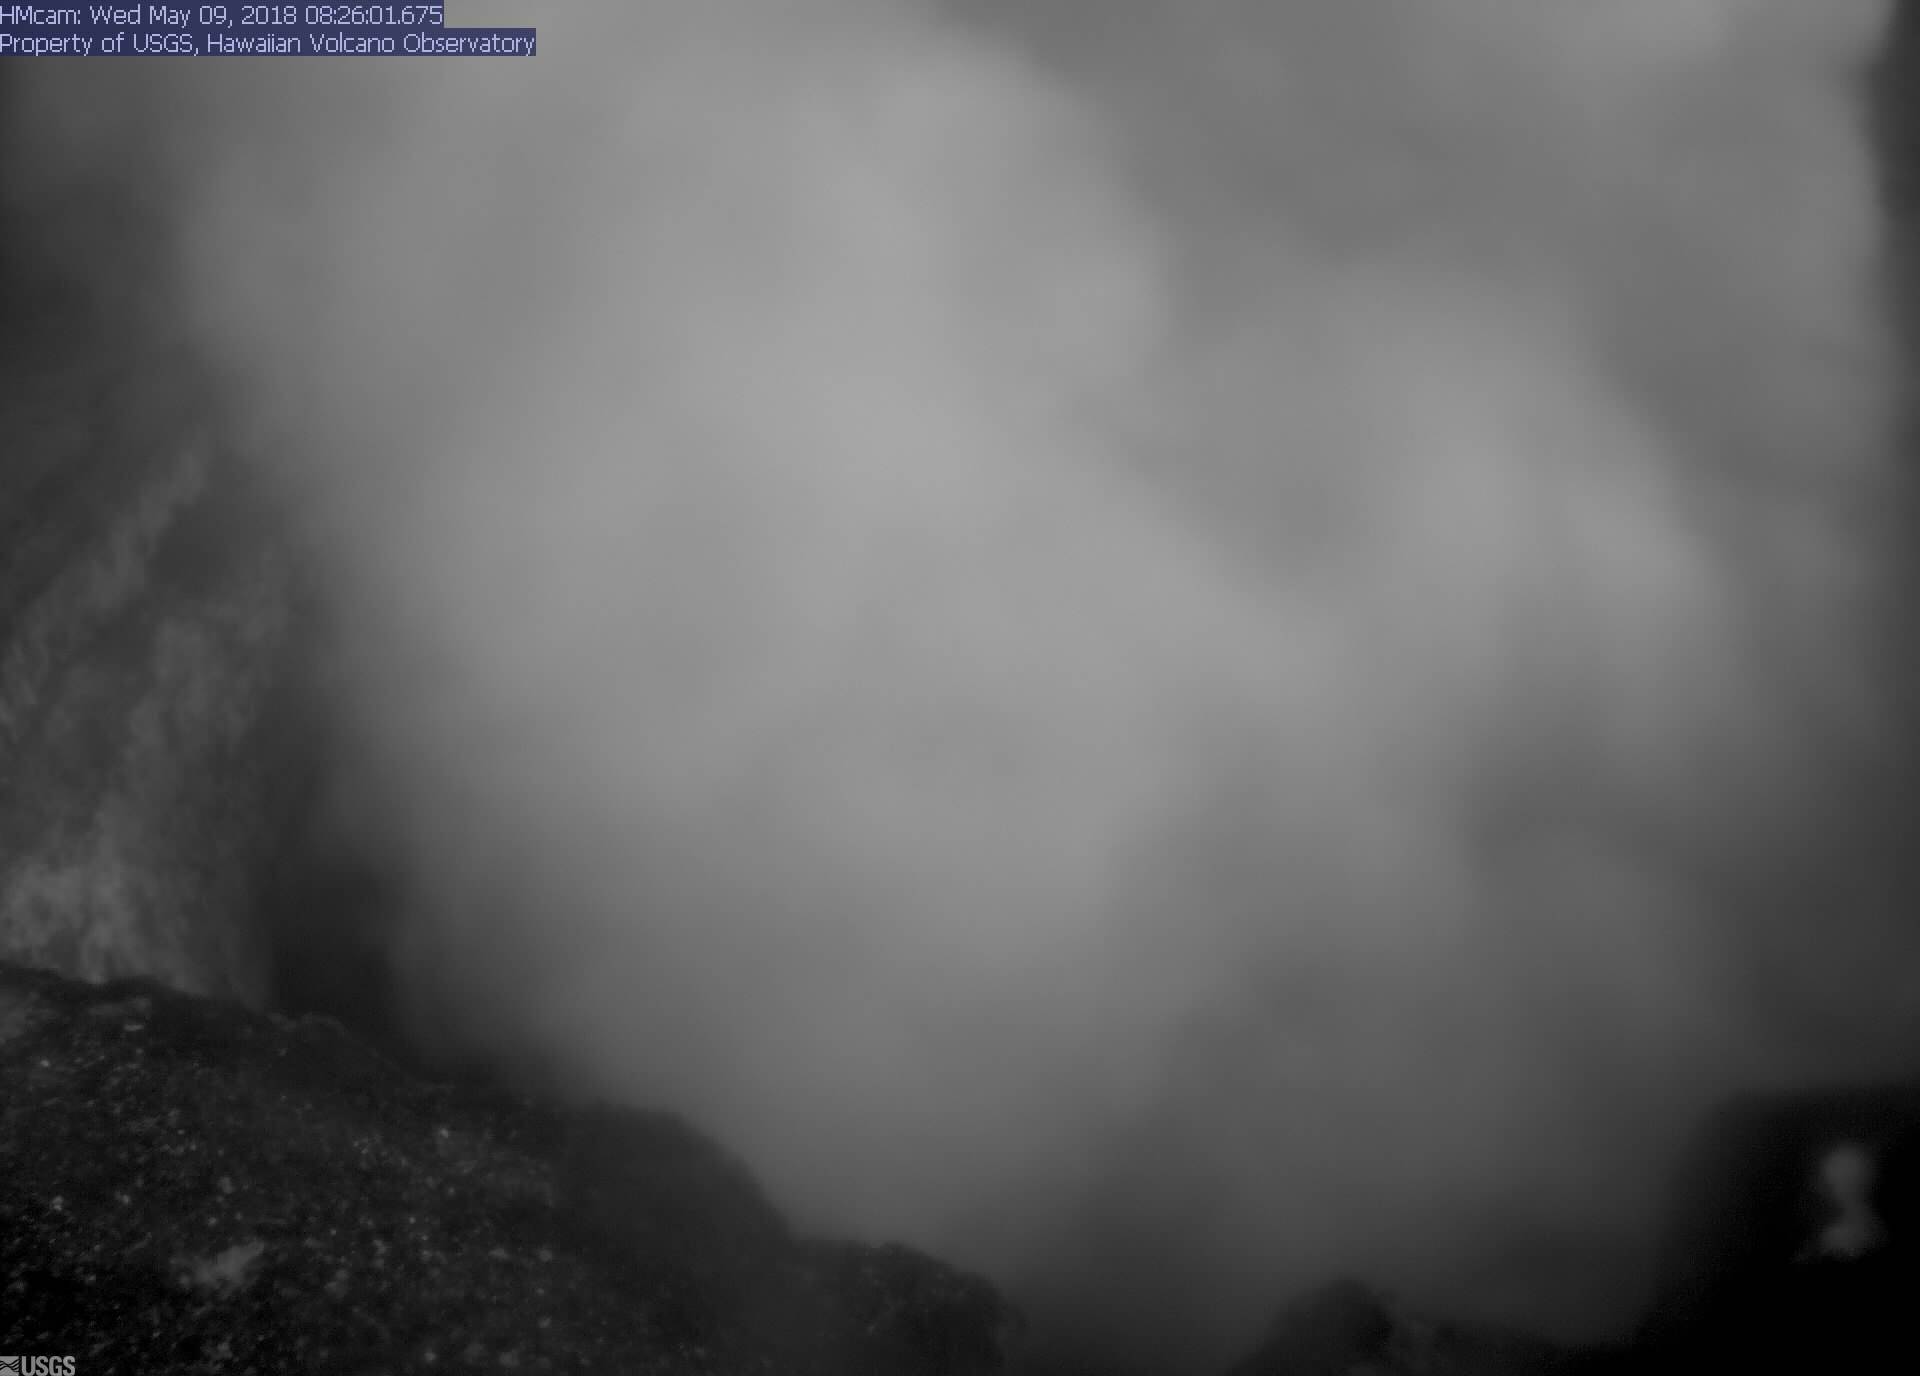 Kilauea Volcano Vent Webcam Image